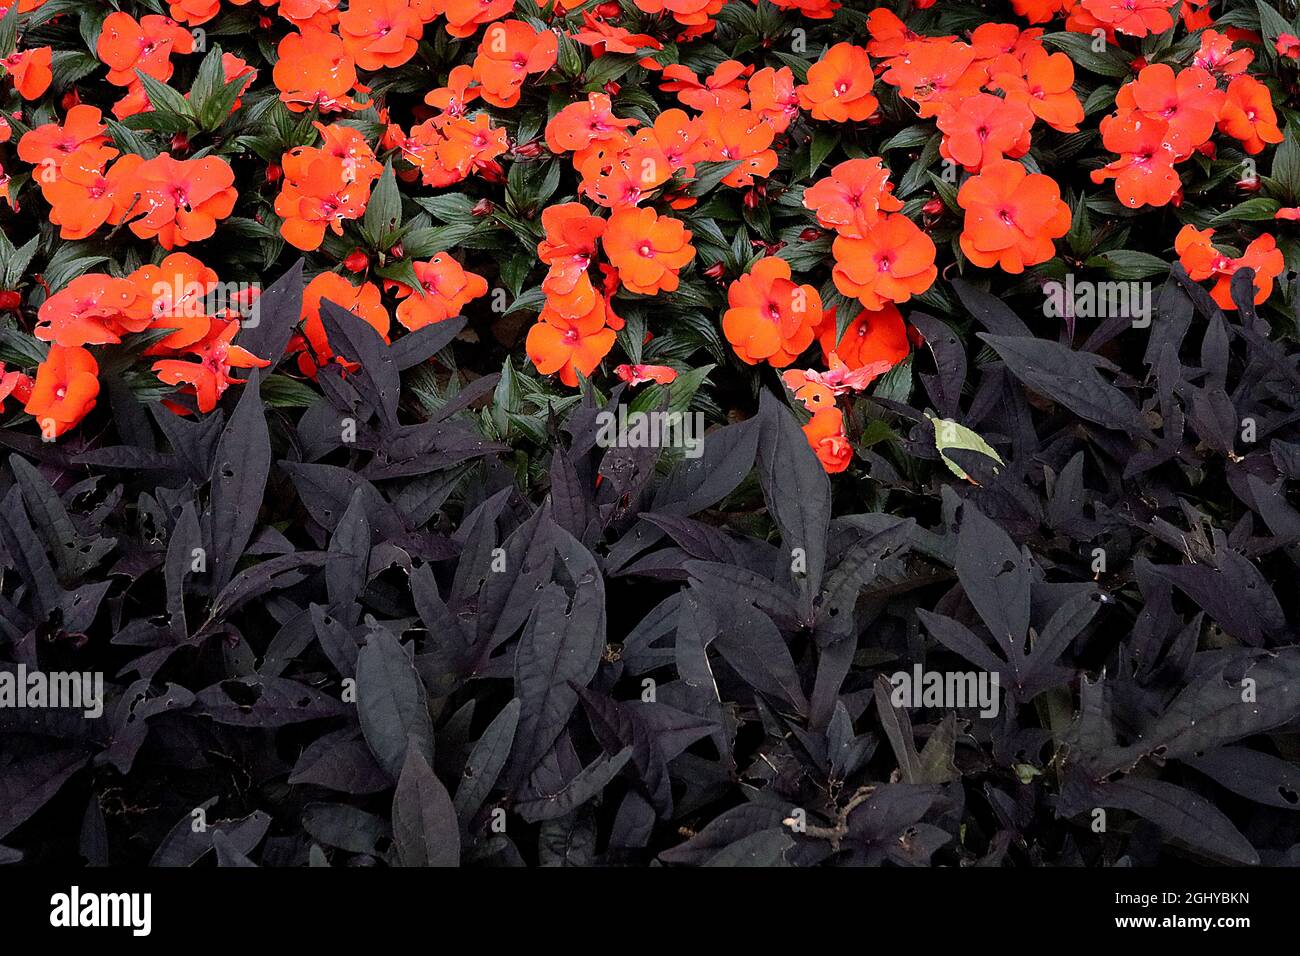 Impatiens Sunpatiens ‘Electric Orange’ New Guinea impatiens Electric Orange - flat semi-double orange flowers, Ipomoea batatas, Stock Photo